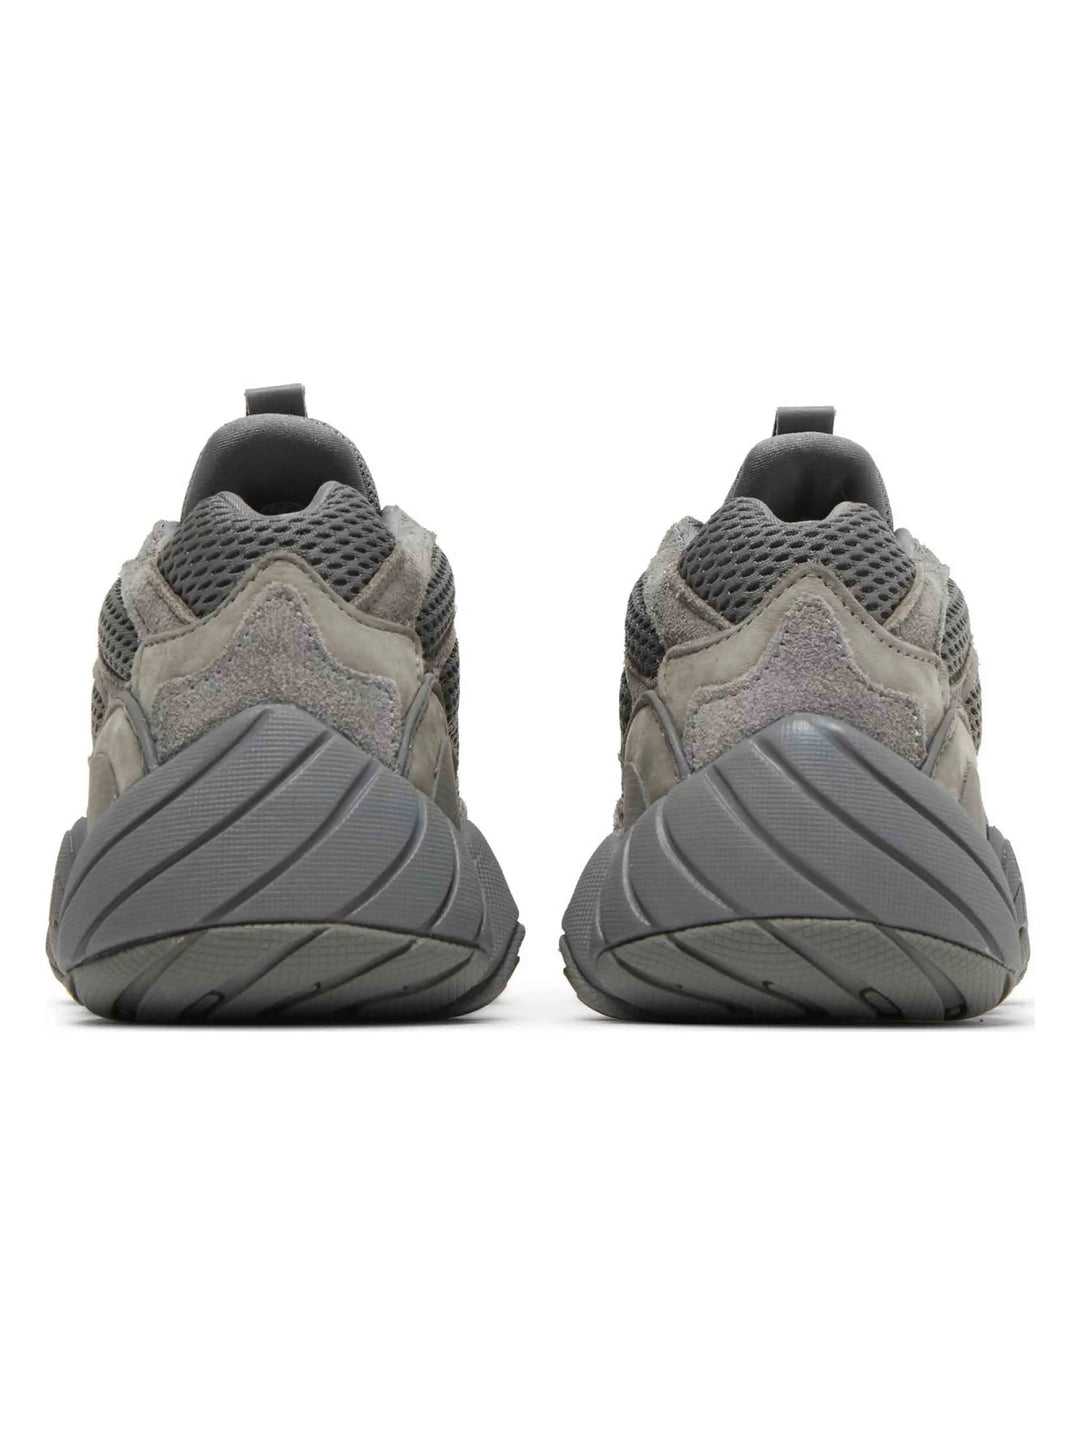 Adidas Yeezy 500 Granite Prior